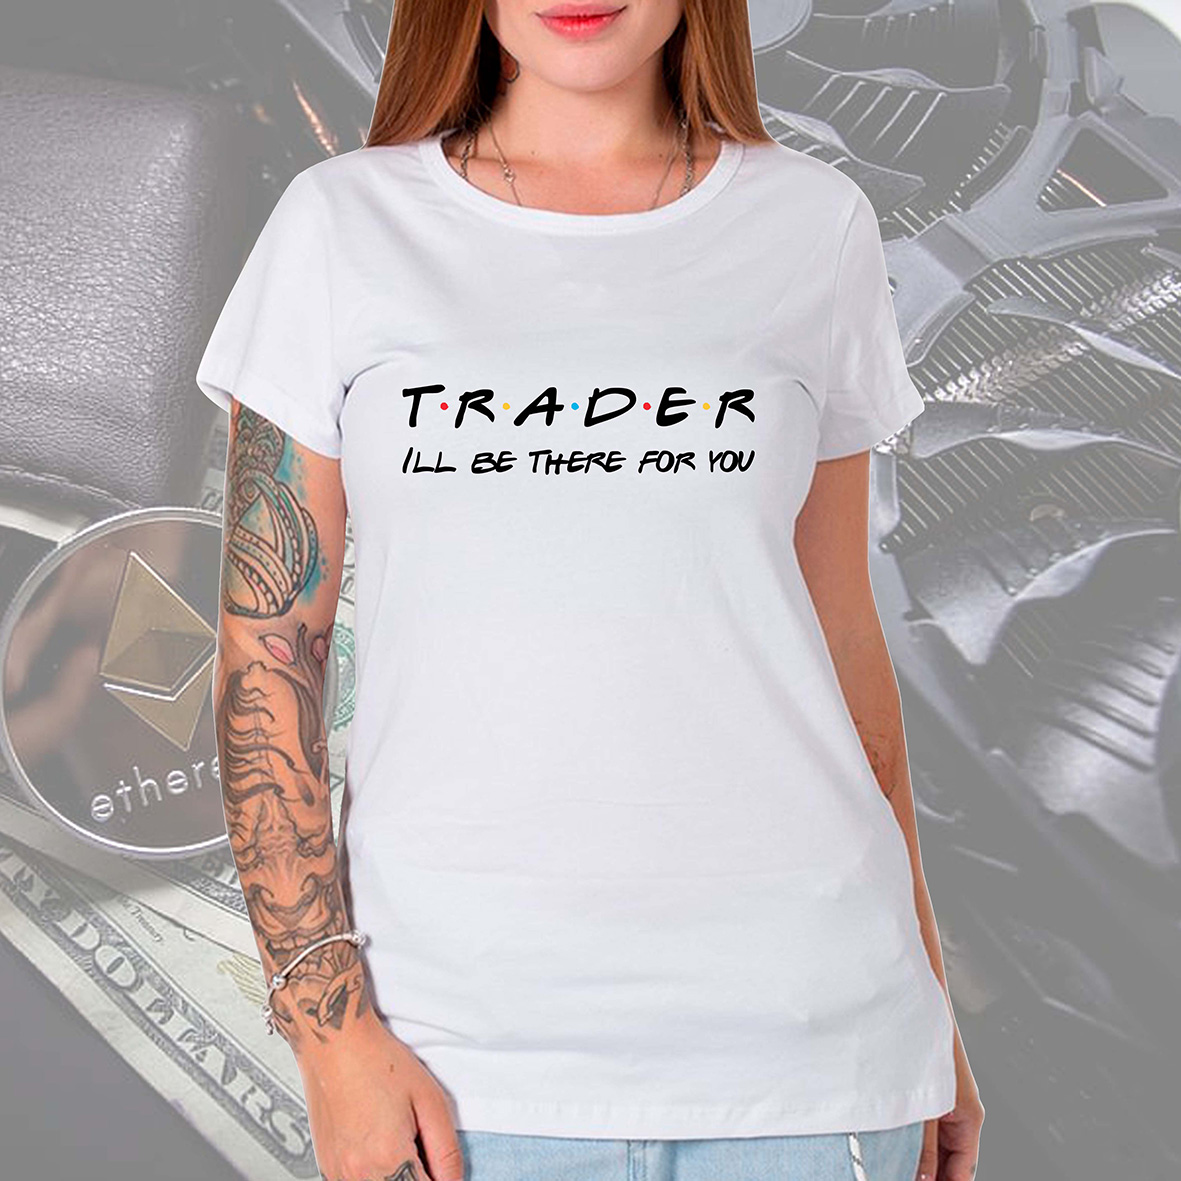 Camiseta Unissex Feminina Trader Friends Investidor Financeiro Compra Venda Bitcoin Shiba Doge Etherium (Branca)  - CD